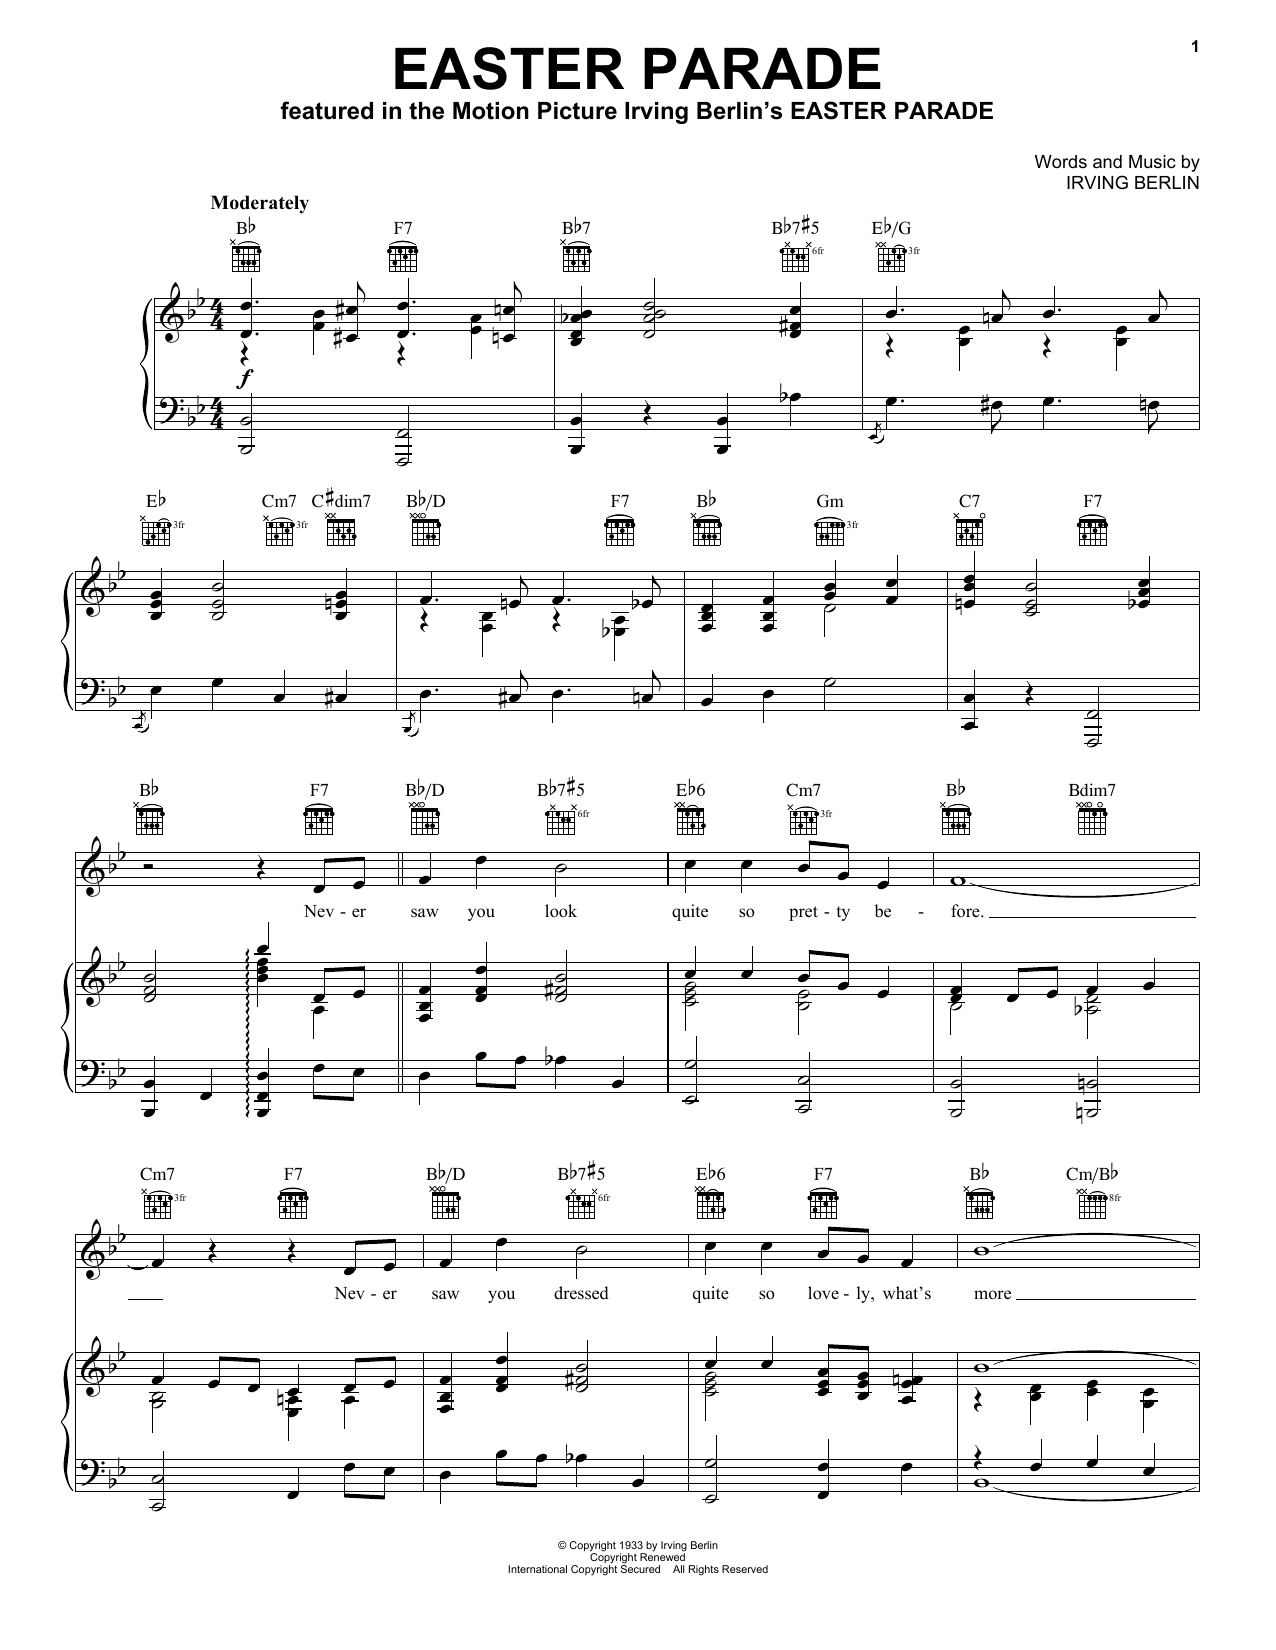 Irving Berlin Easter Parade Sheet Music Notes & Chords for Ukulele - Download or Print PDF